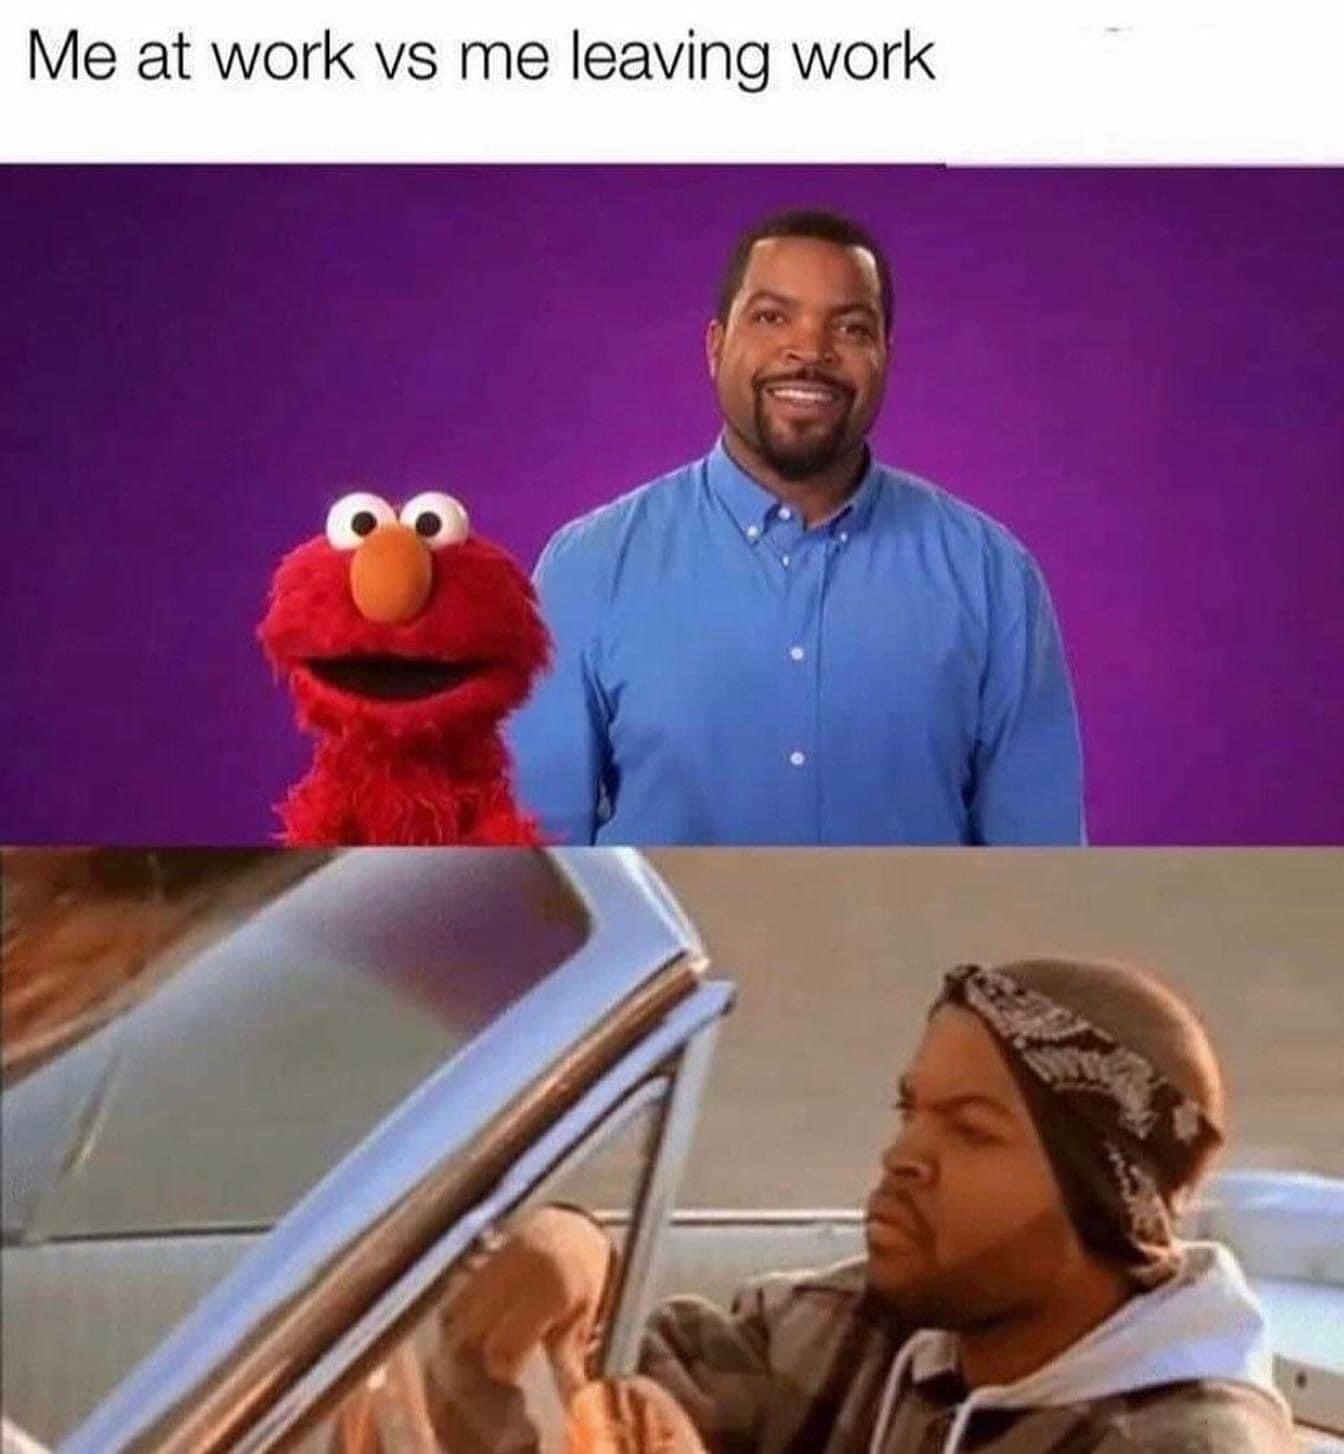 Me at work vs me leaving work.